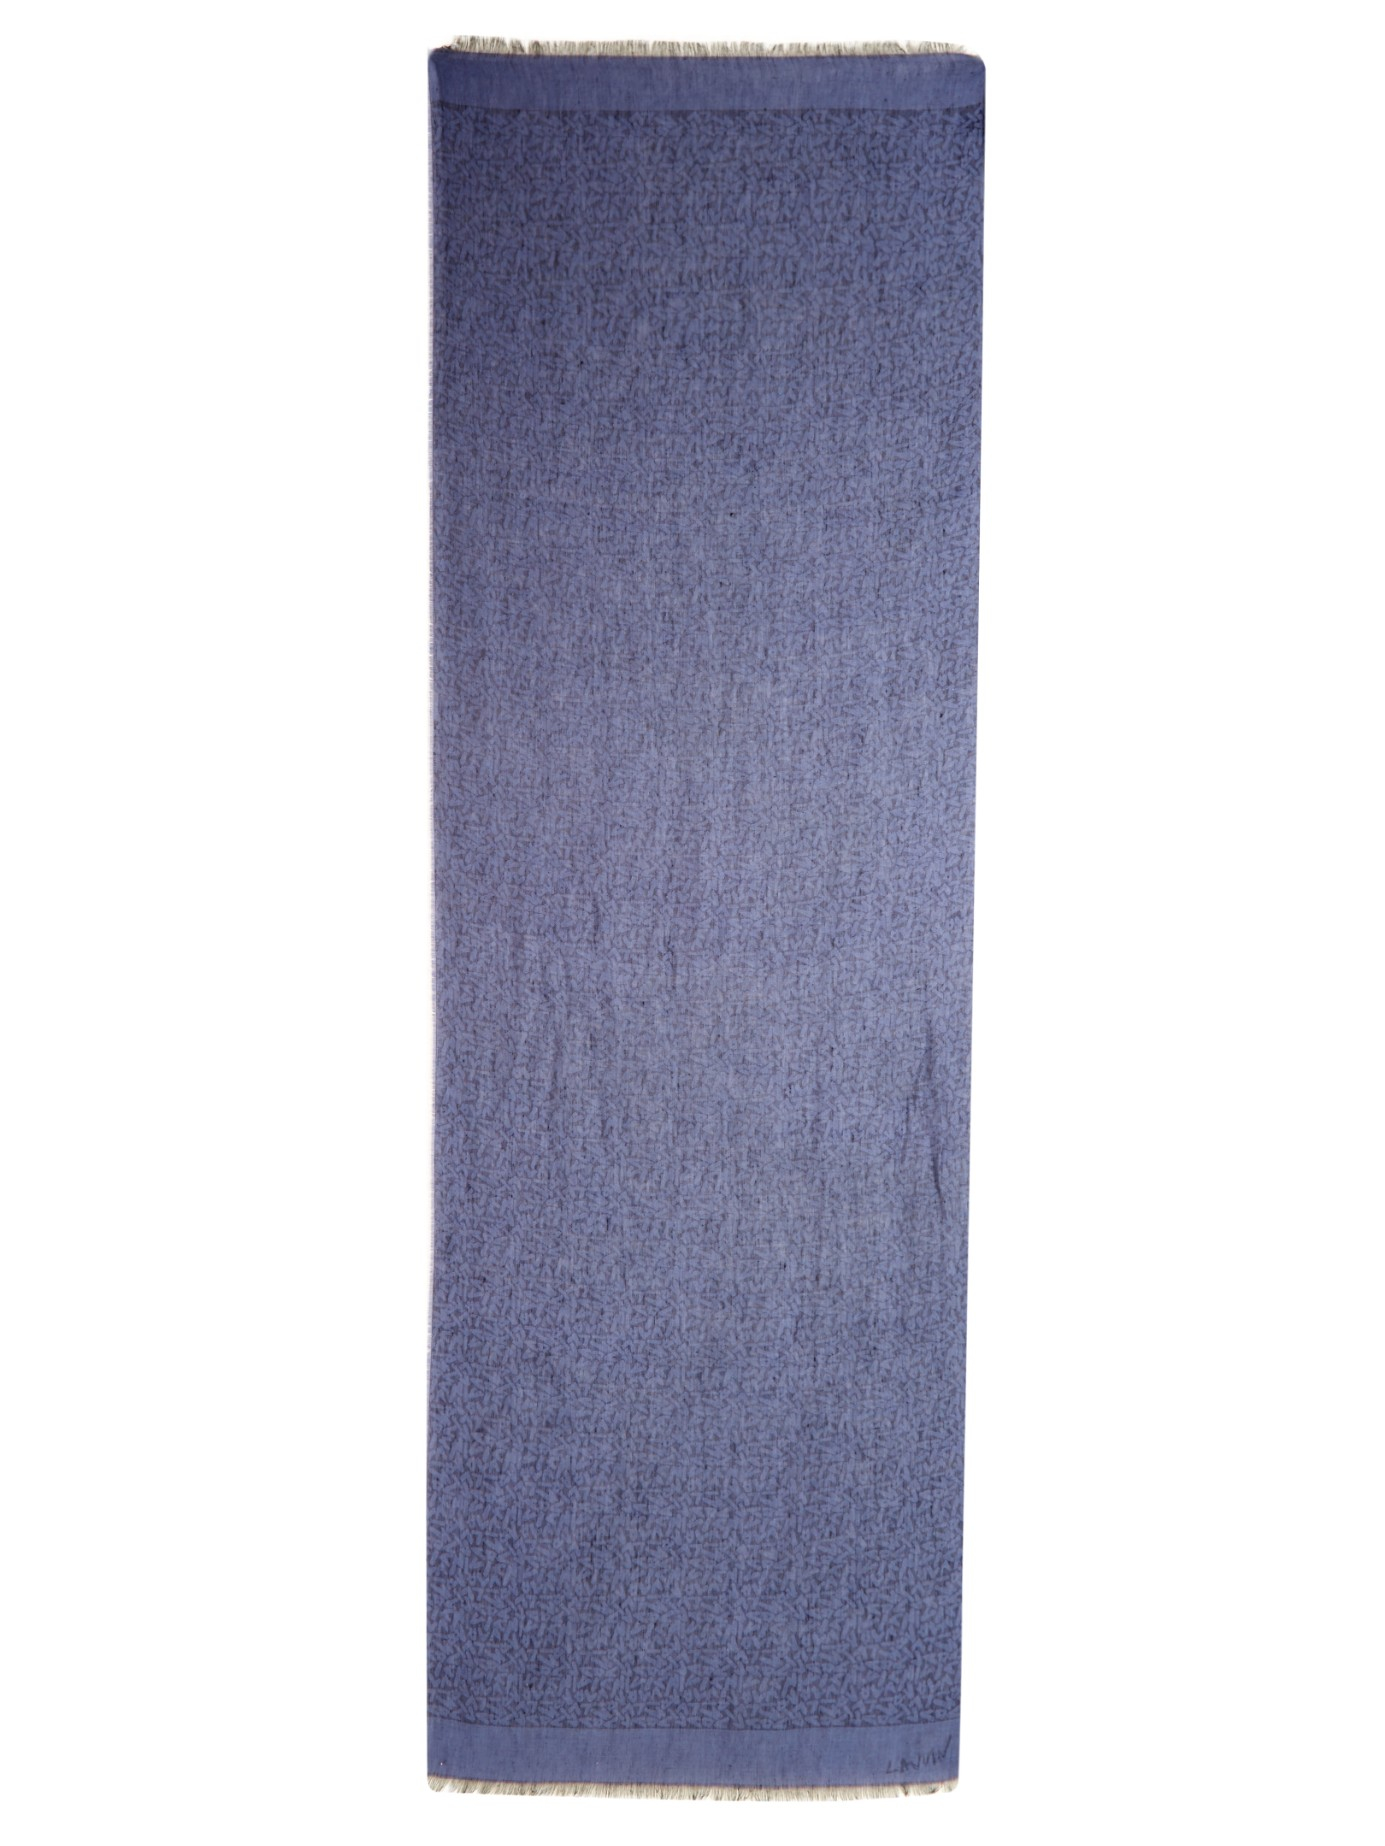 Lyst - Lanvin Monogram Linen And Cashmere-blend Scarf in Blue for Men